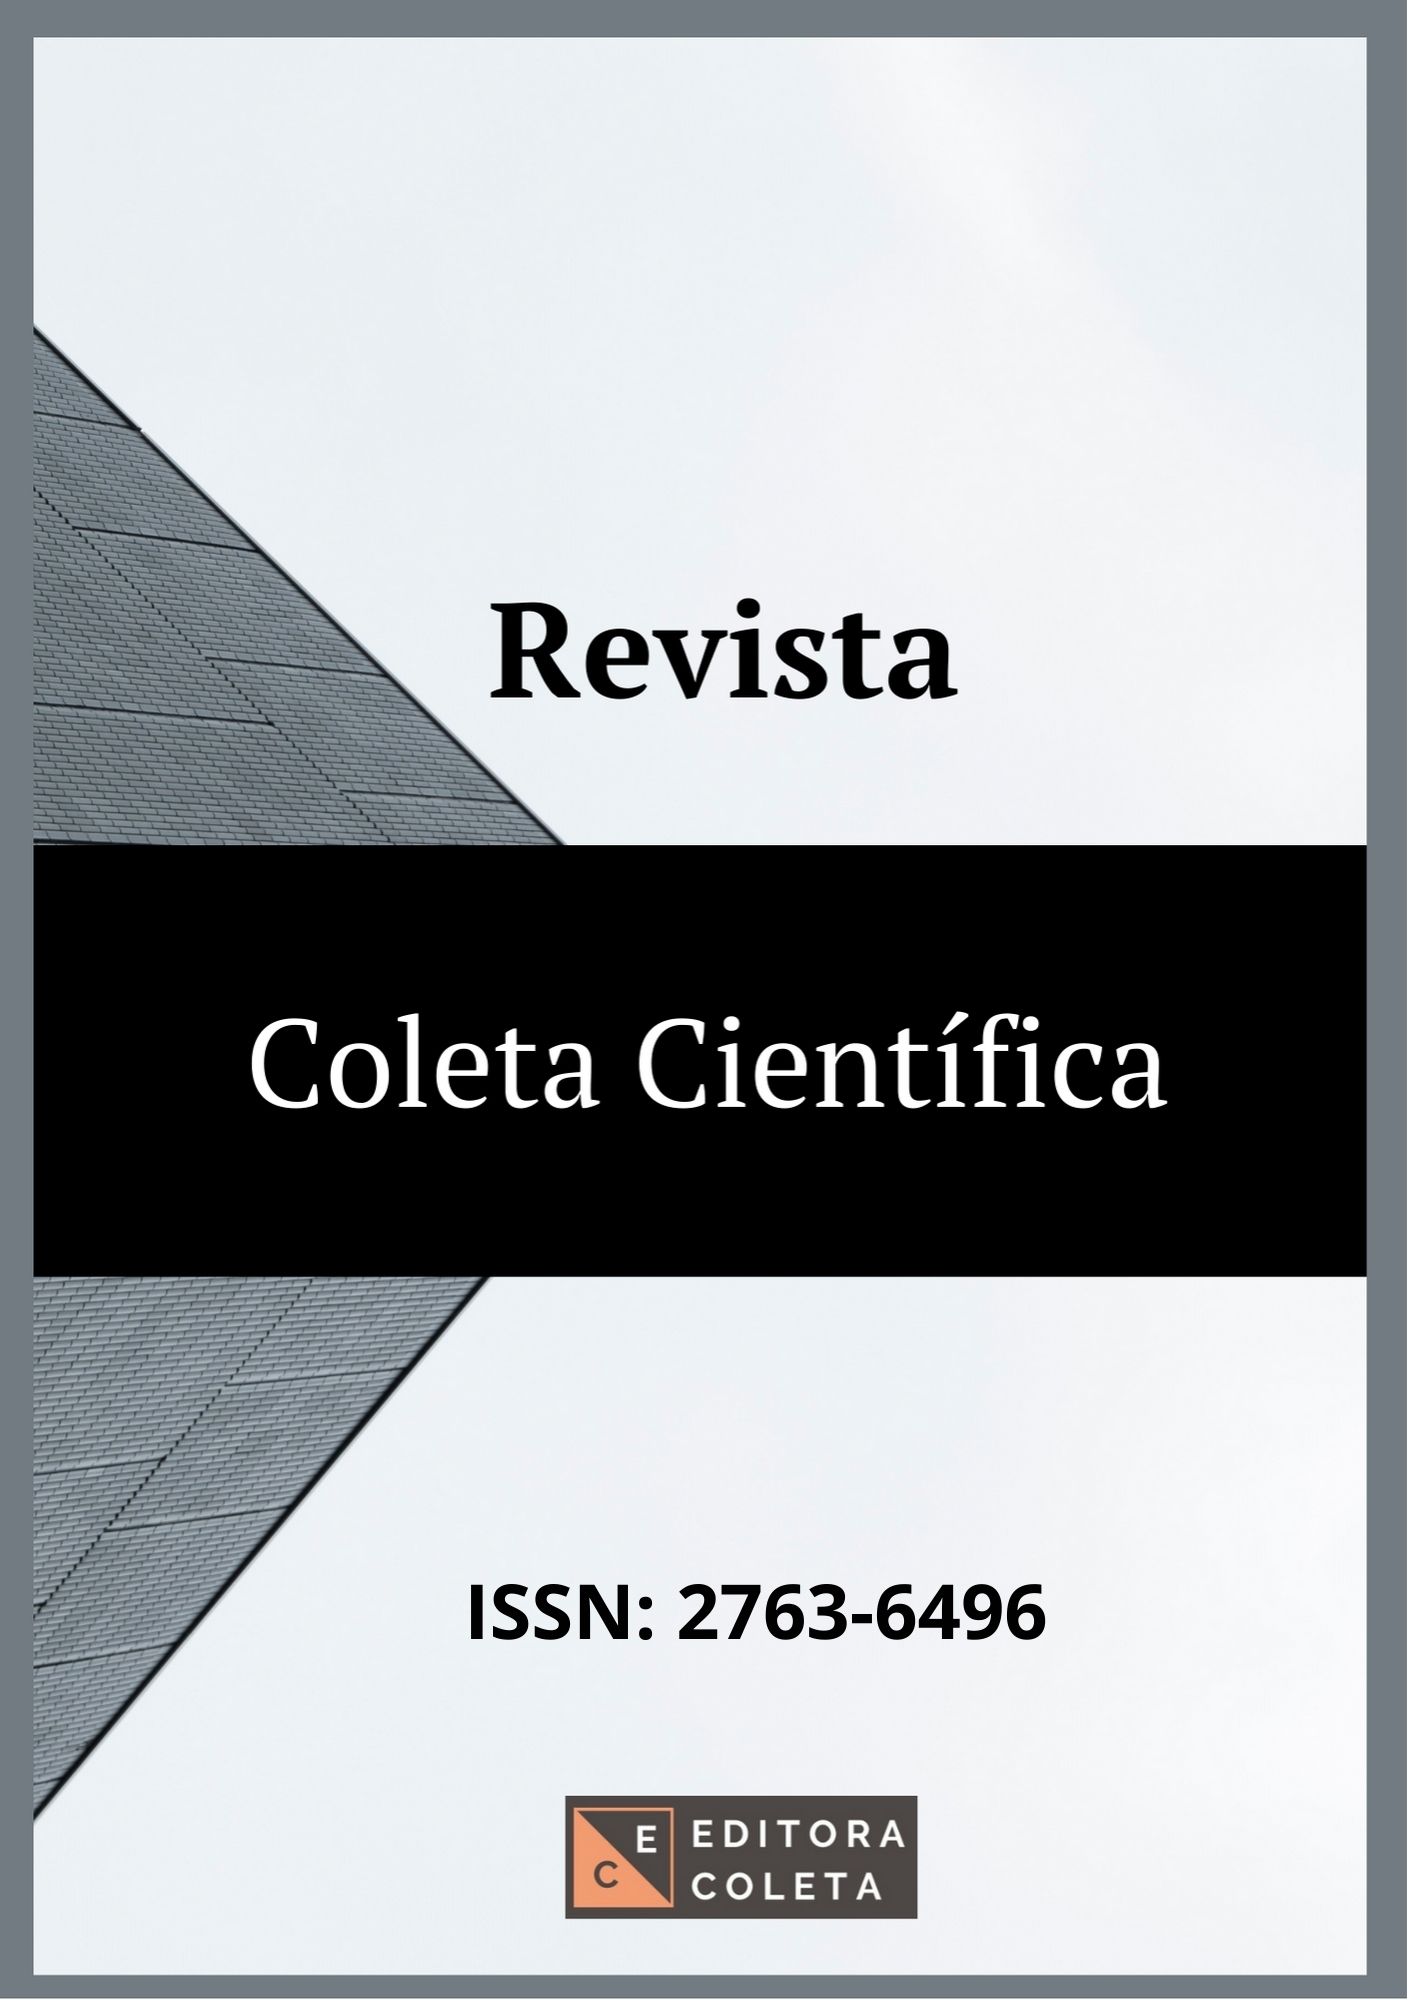 					Visualizar v. 4 n. 8 (2020): Revista Coleta Científica
				